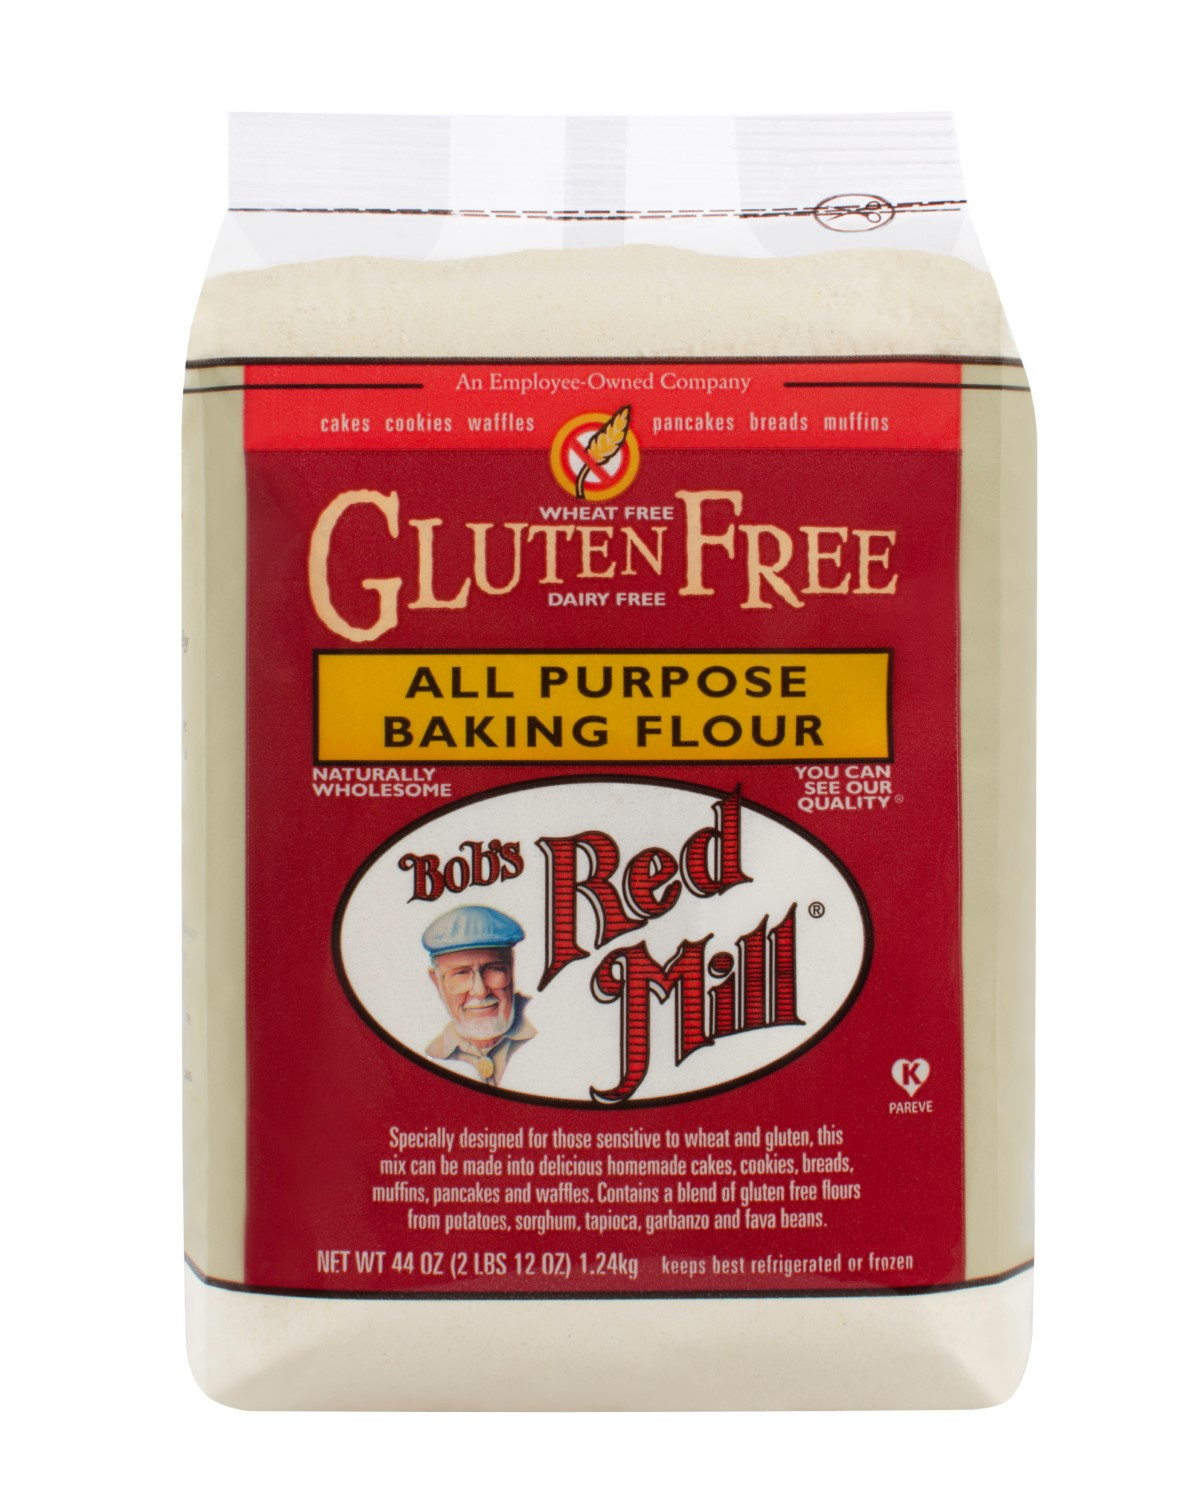 Bobs Red Mill Gluten Free Bread
 Bob s Red Mill Gluten Free All Purpose Baking Flour 44 Oz